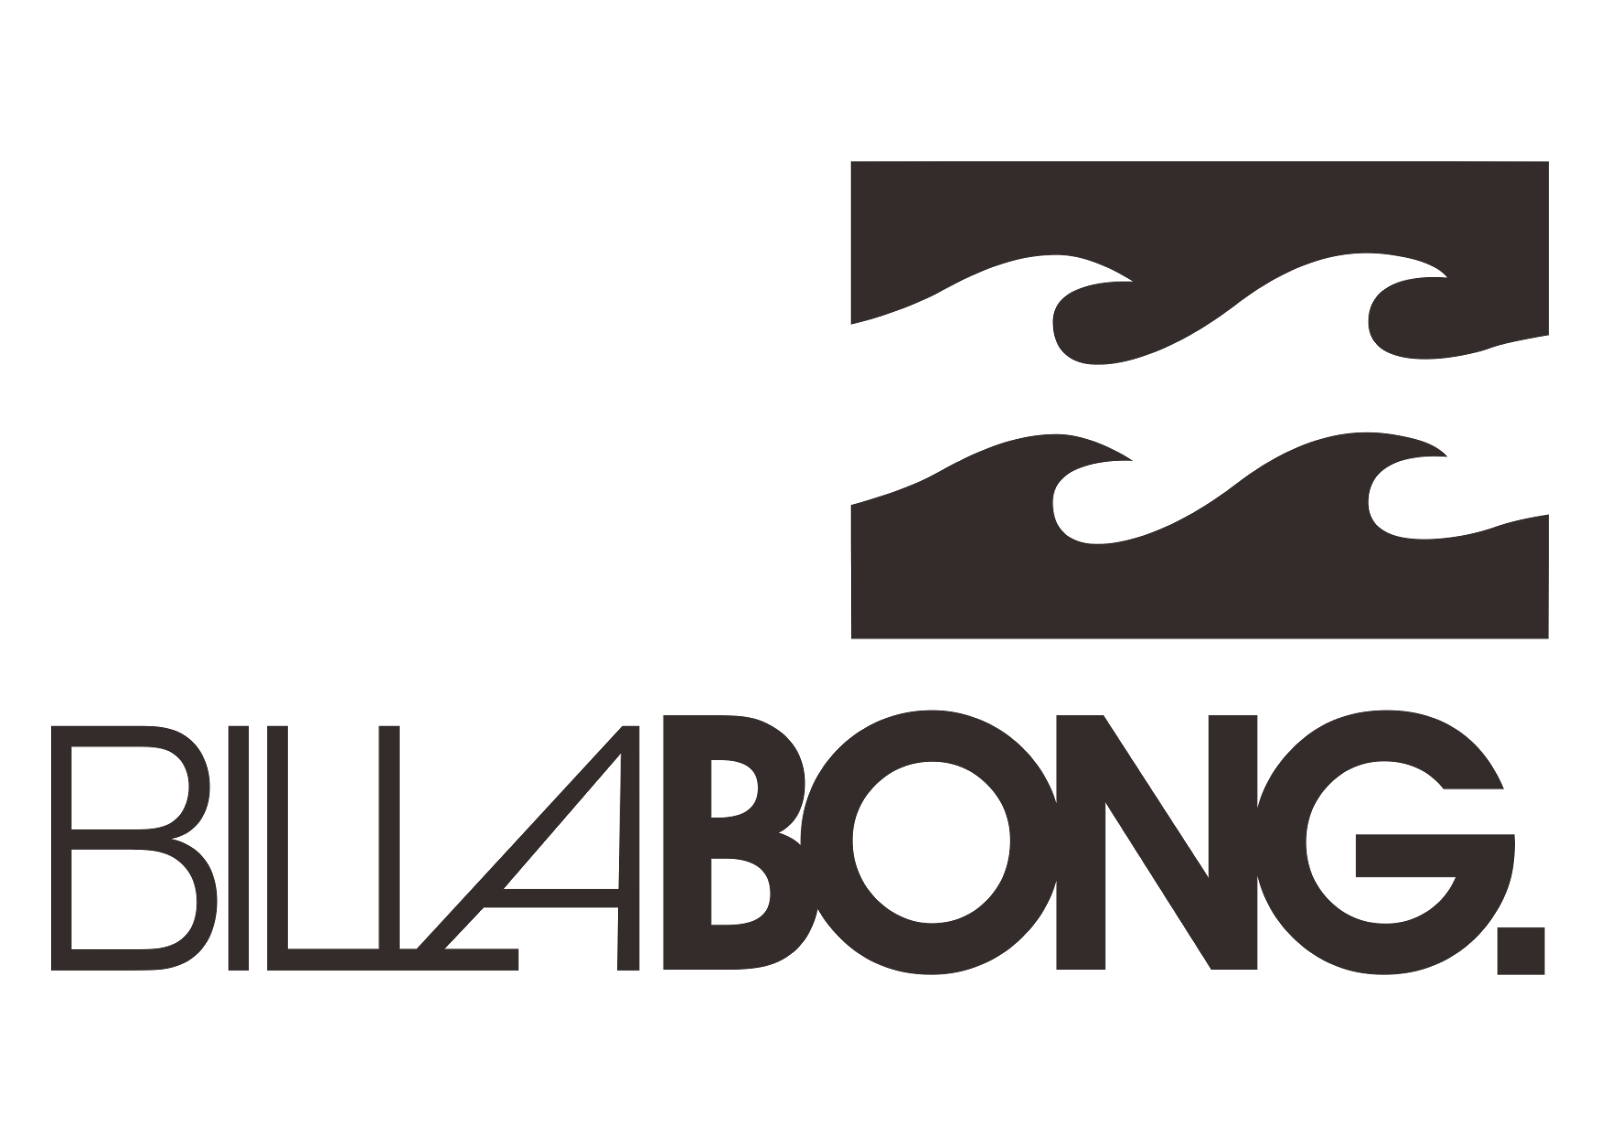 Billabong Logo - Billabong Logo Vector | Vector logo download | Logos, Billabong ...